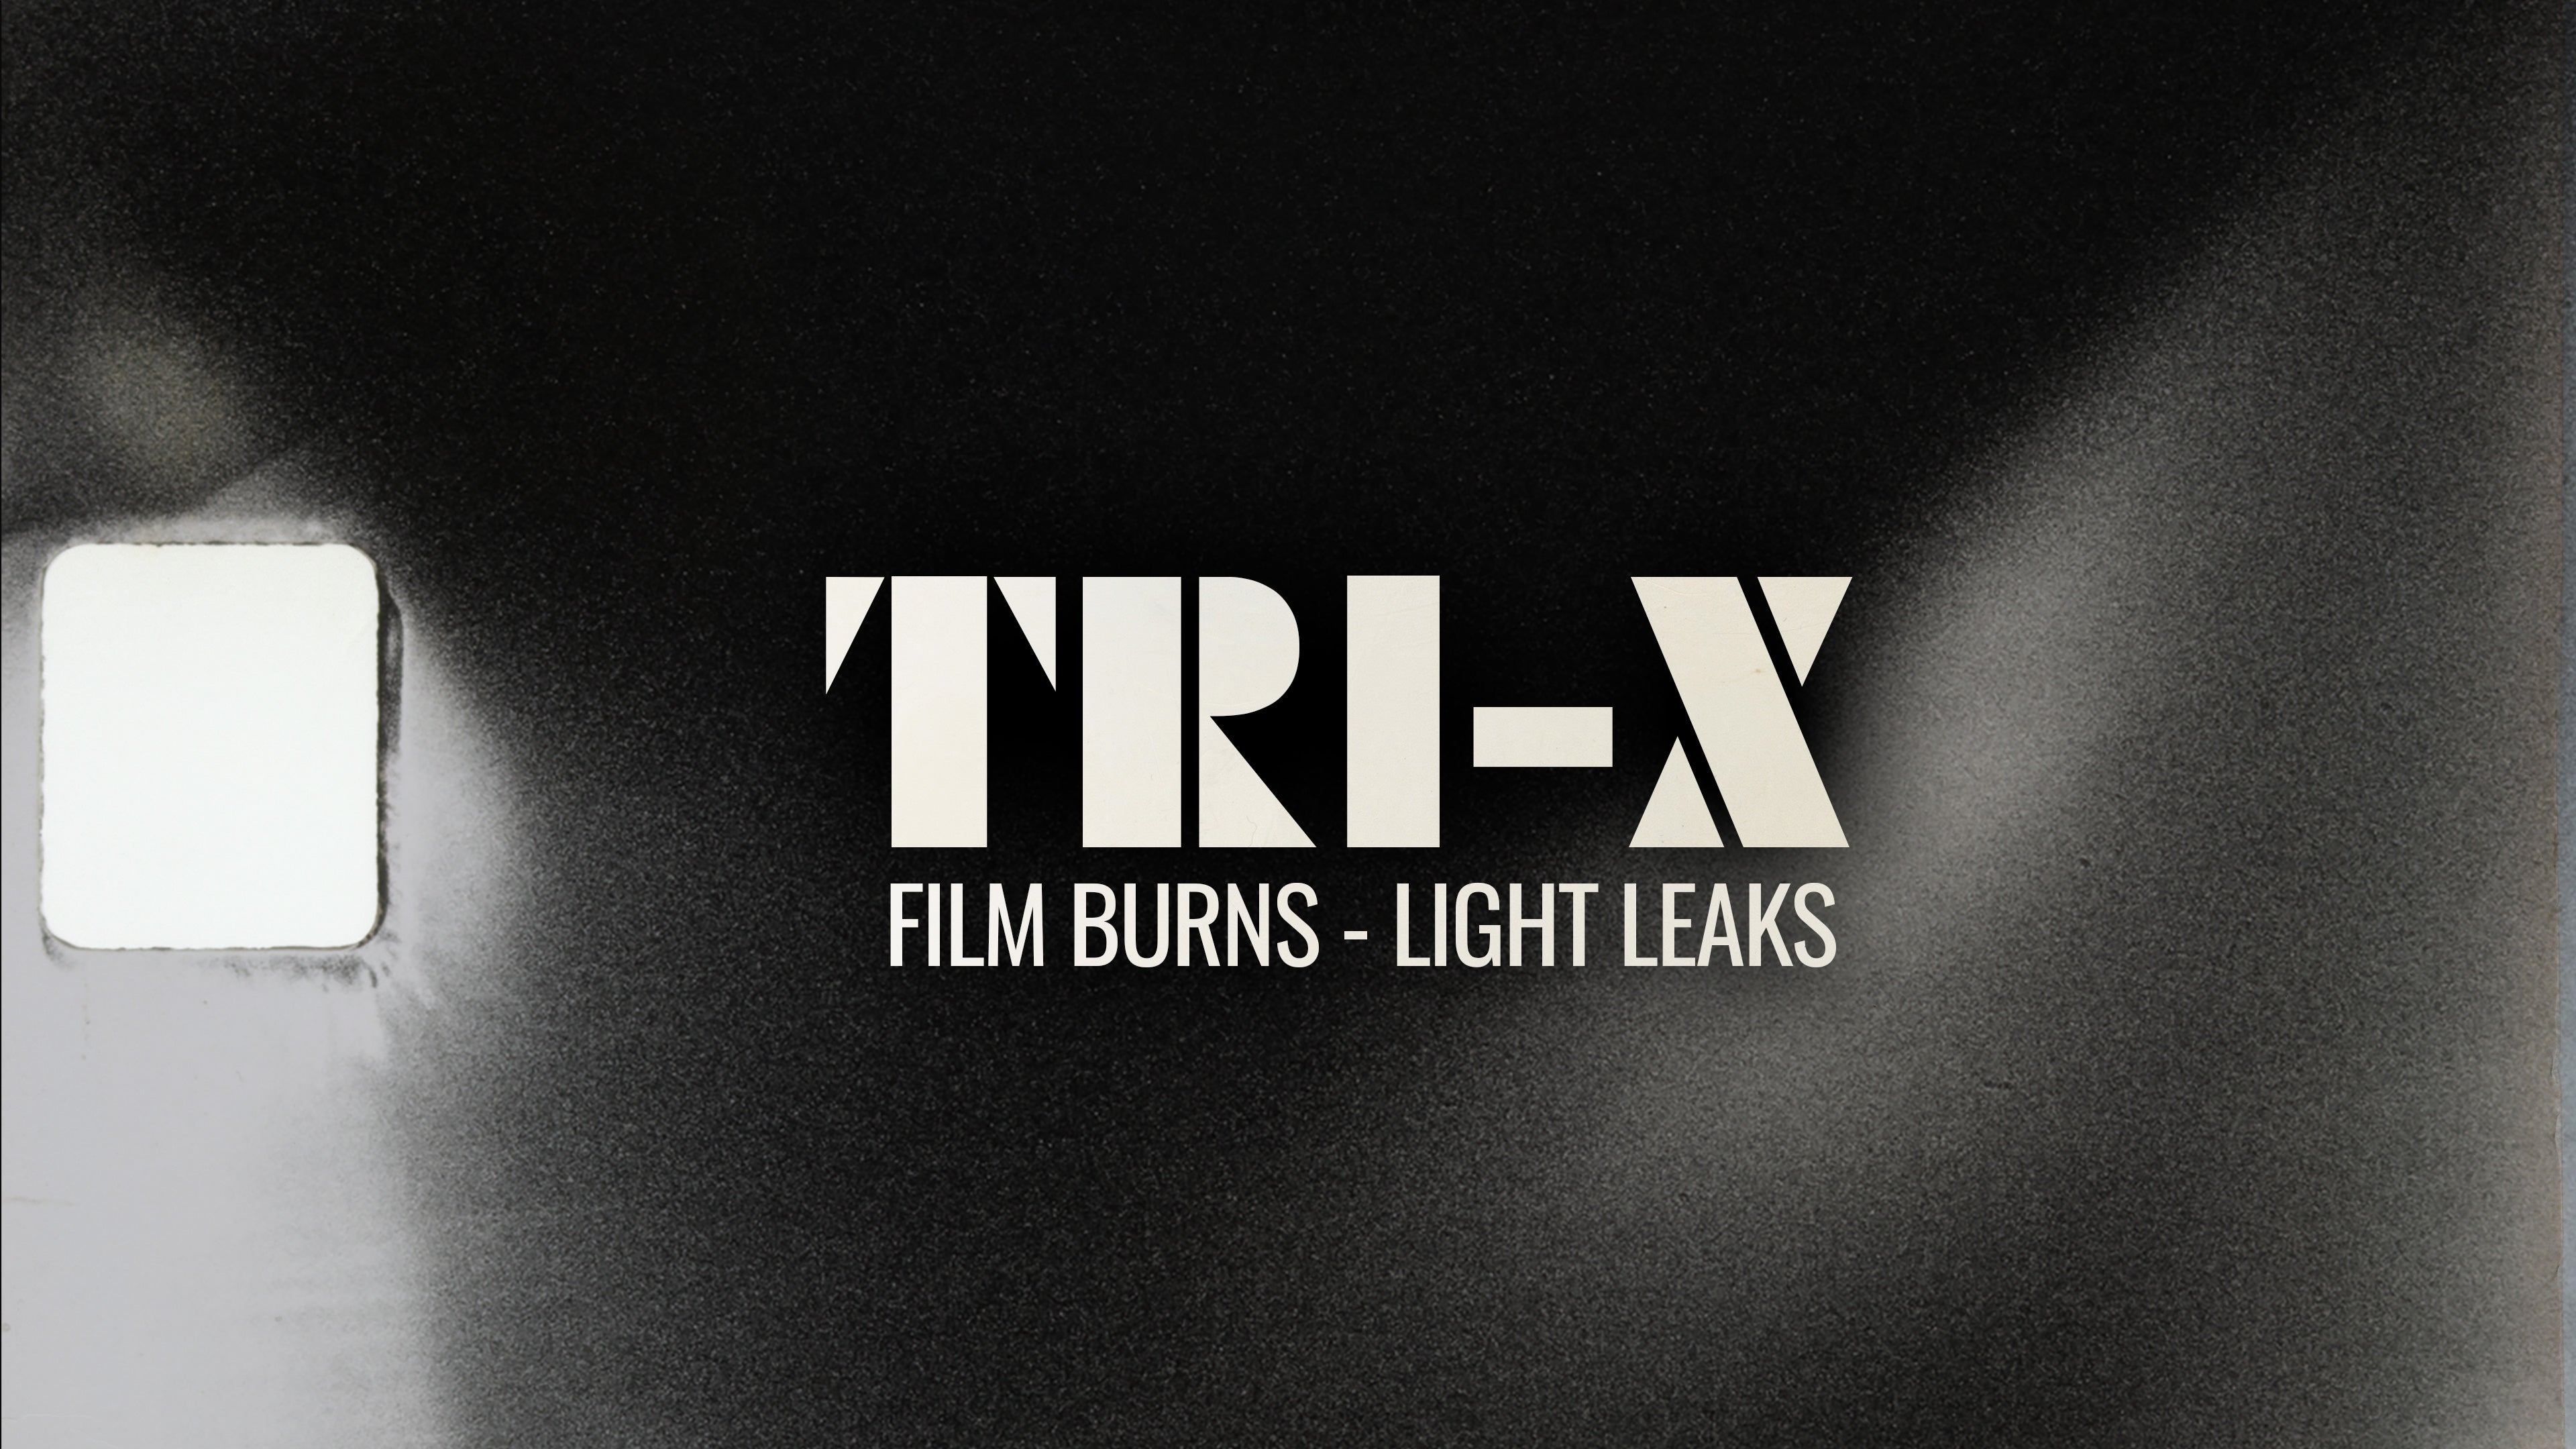 Load video: film burn effects 16mm